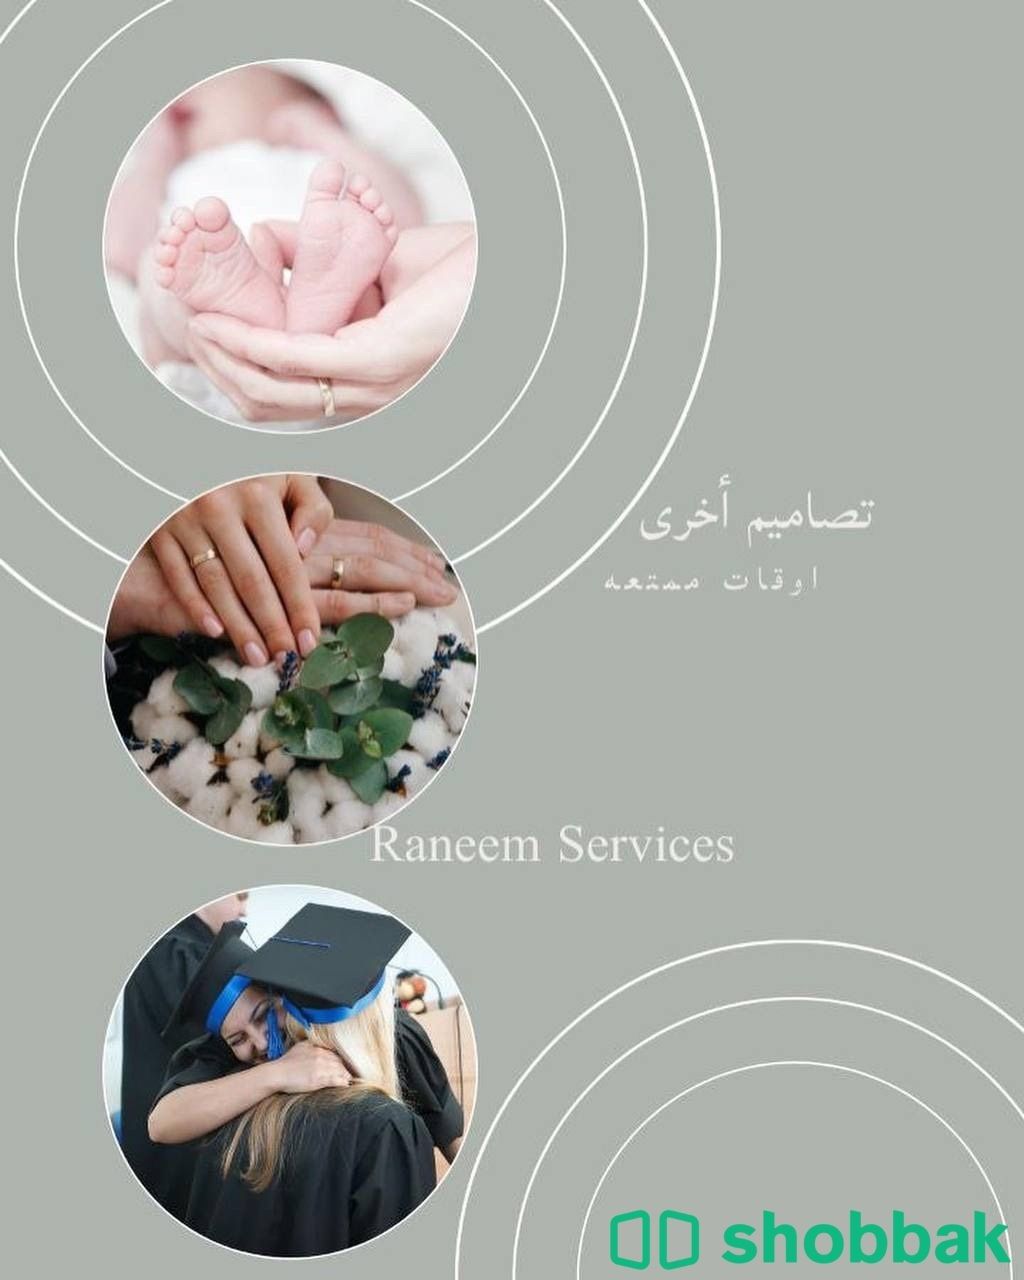 ‏خدمات التصميم. Shobbak Saudi Arabia